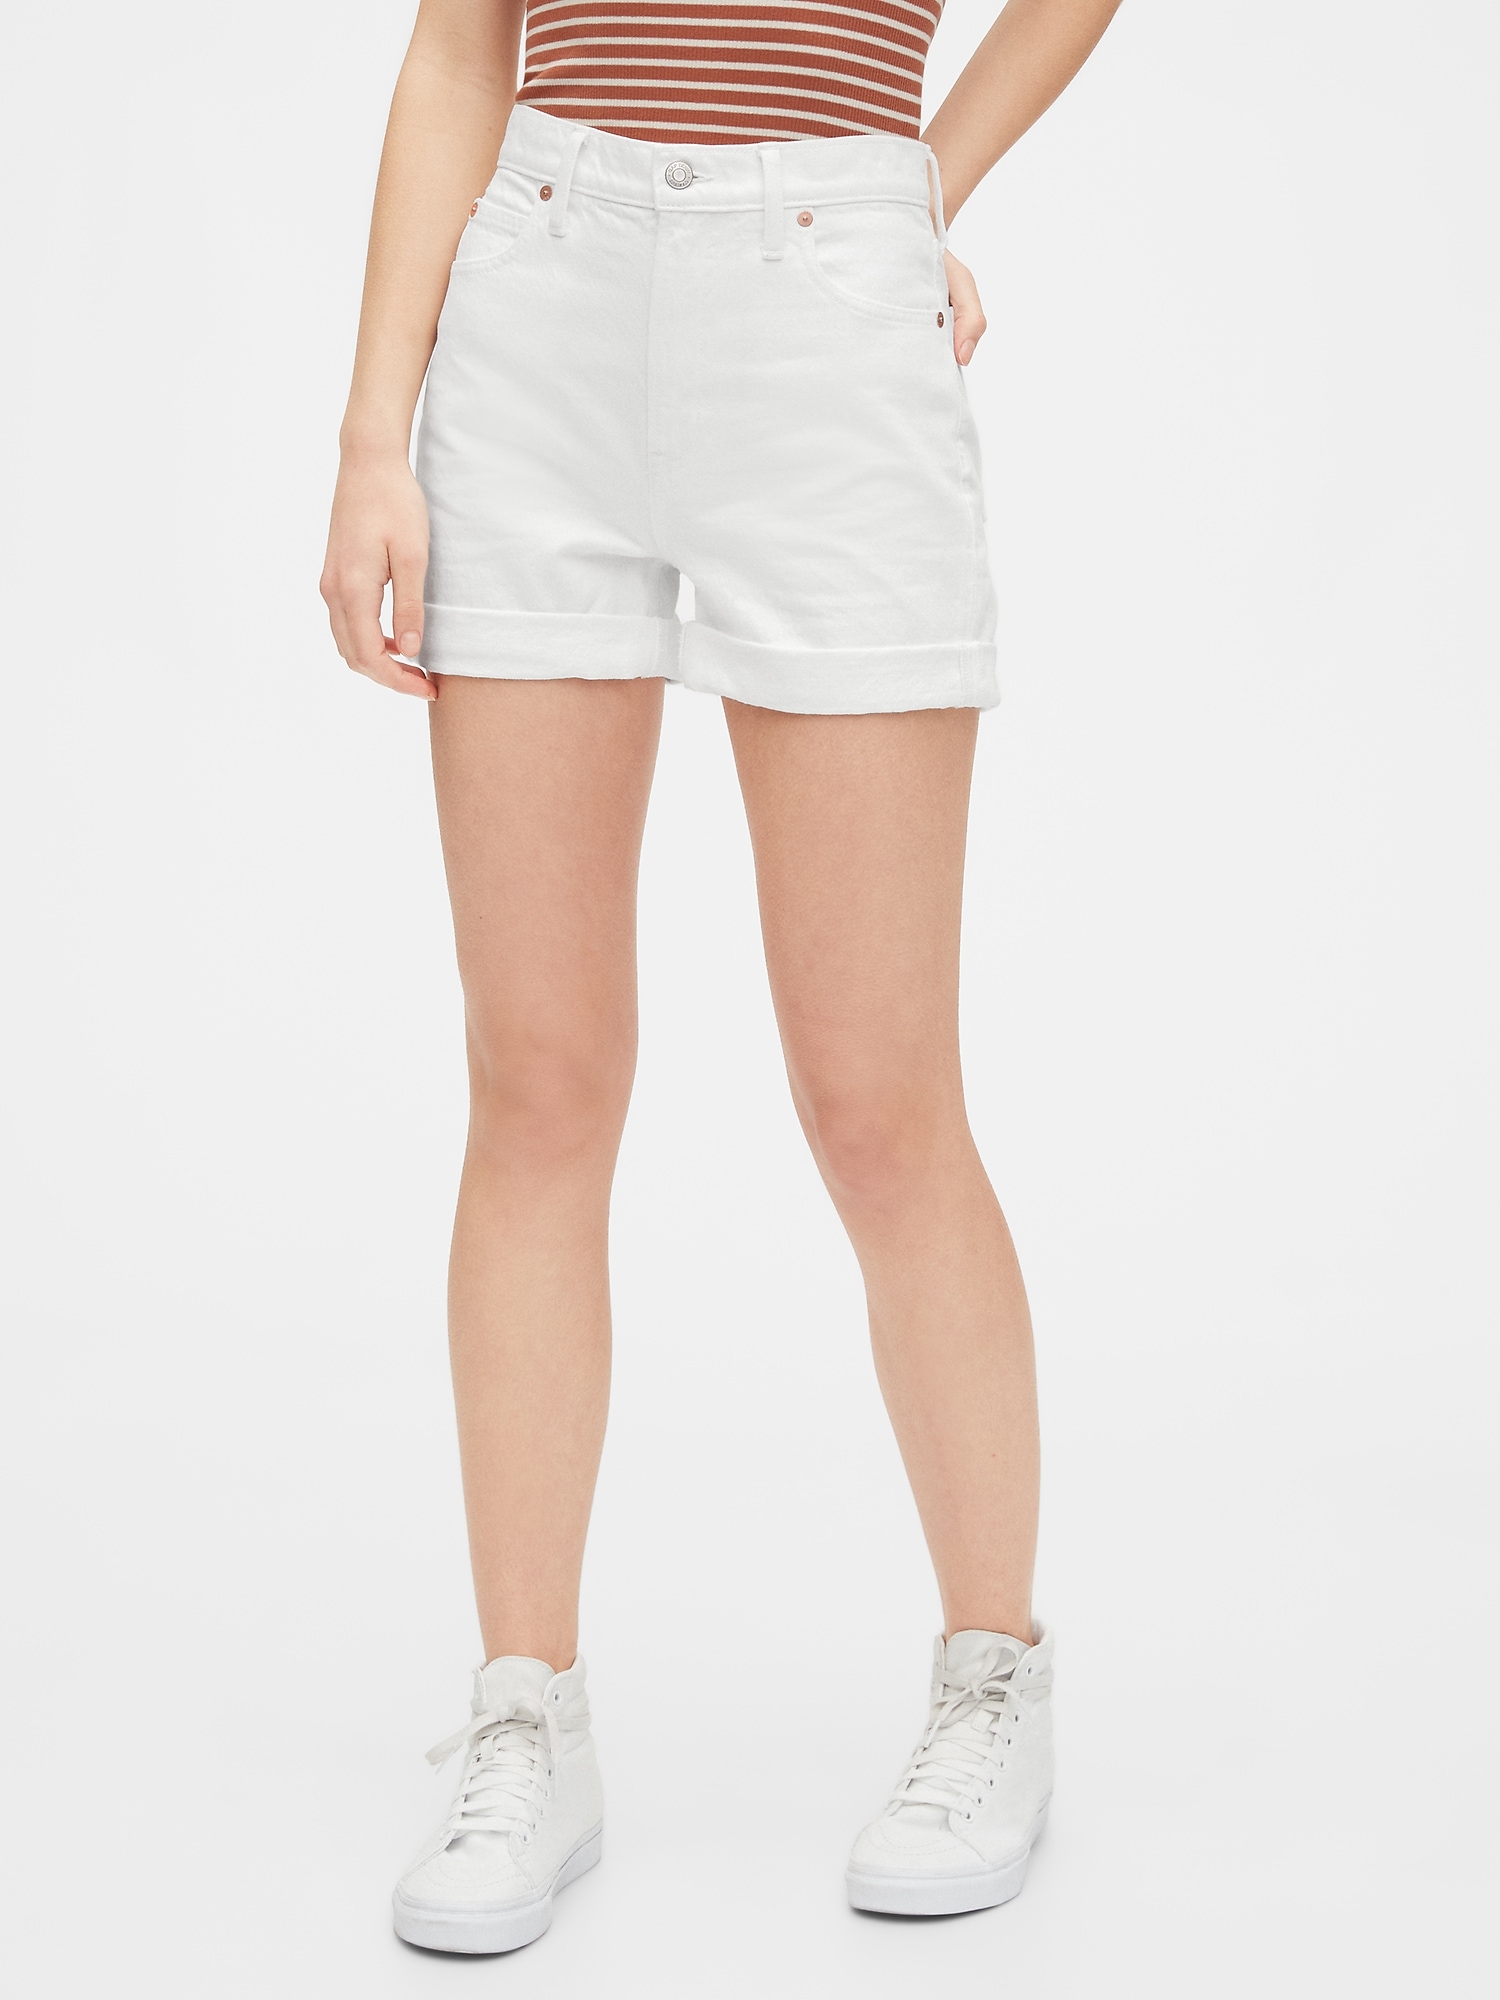 white mom jean shorts